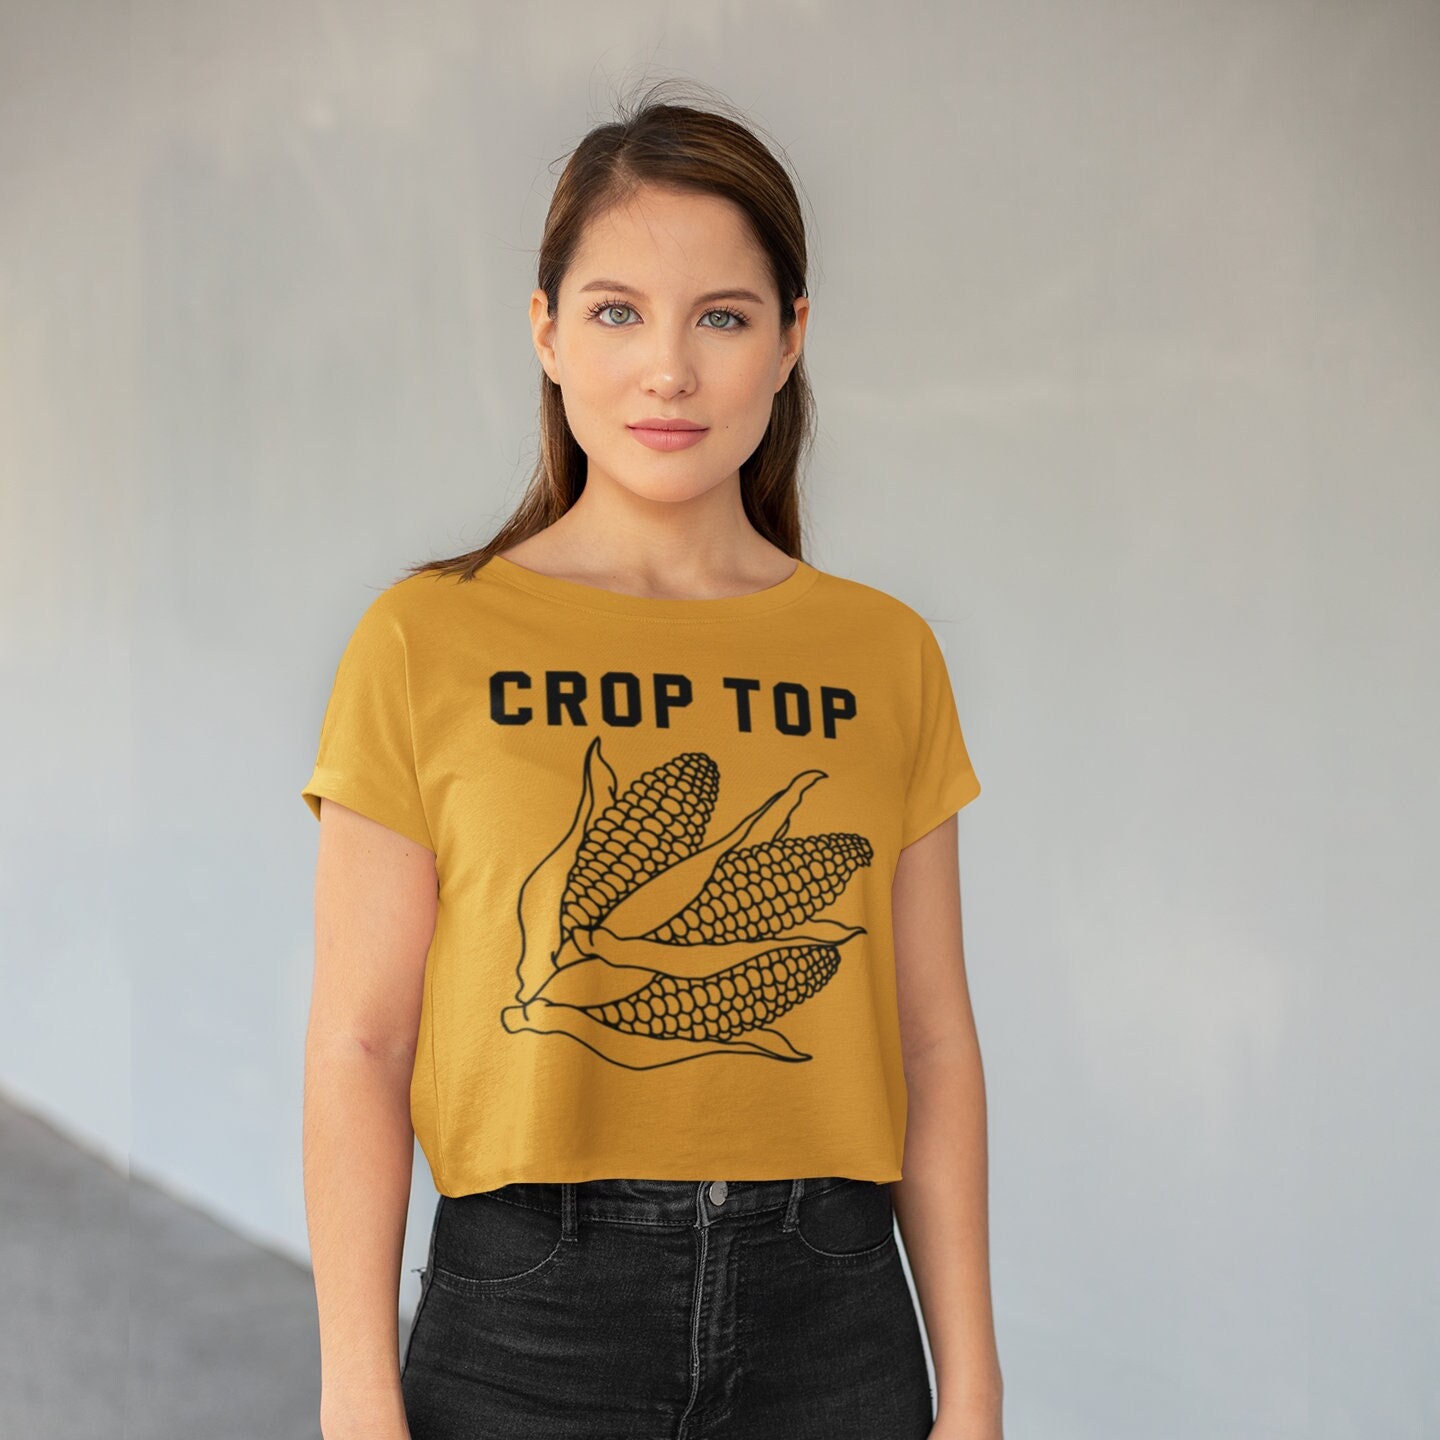 Klatergoud BH Kleding Dameskleding Tops & T-shirts Croptops & Bandeautops Croptops 